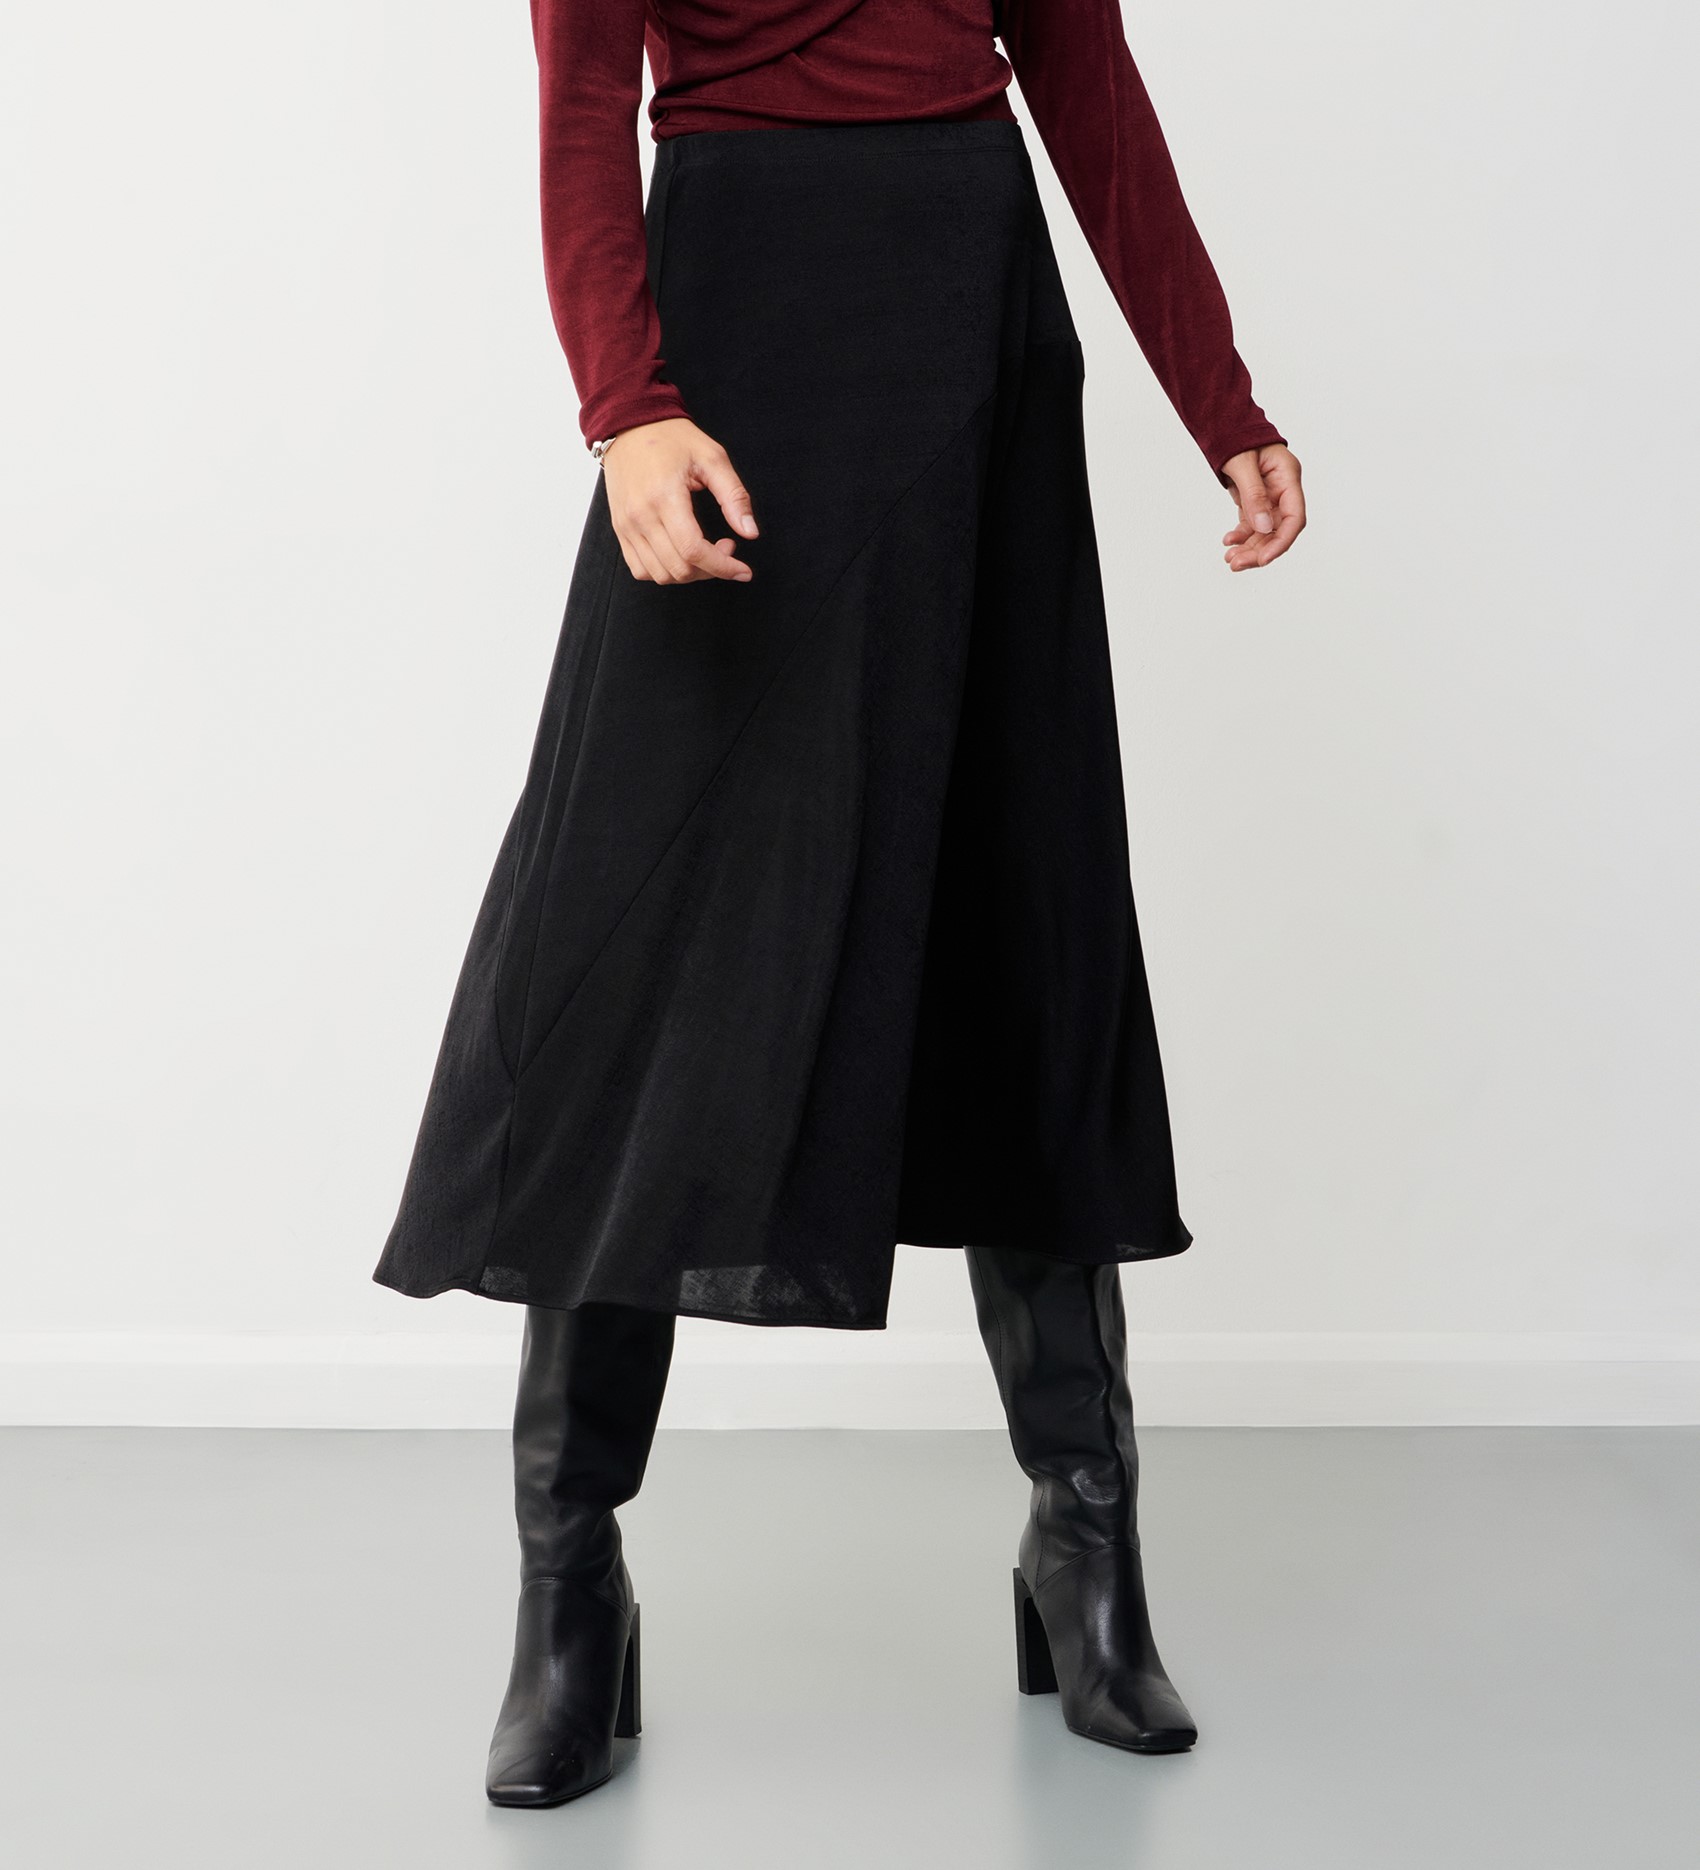 Harlow Black Skirt Jersey Finery Midi London 